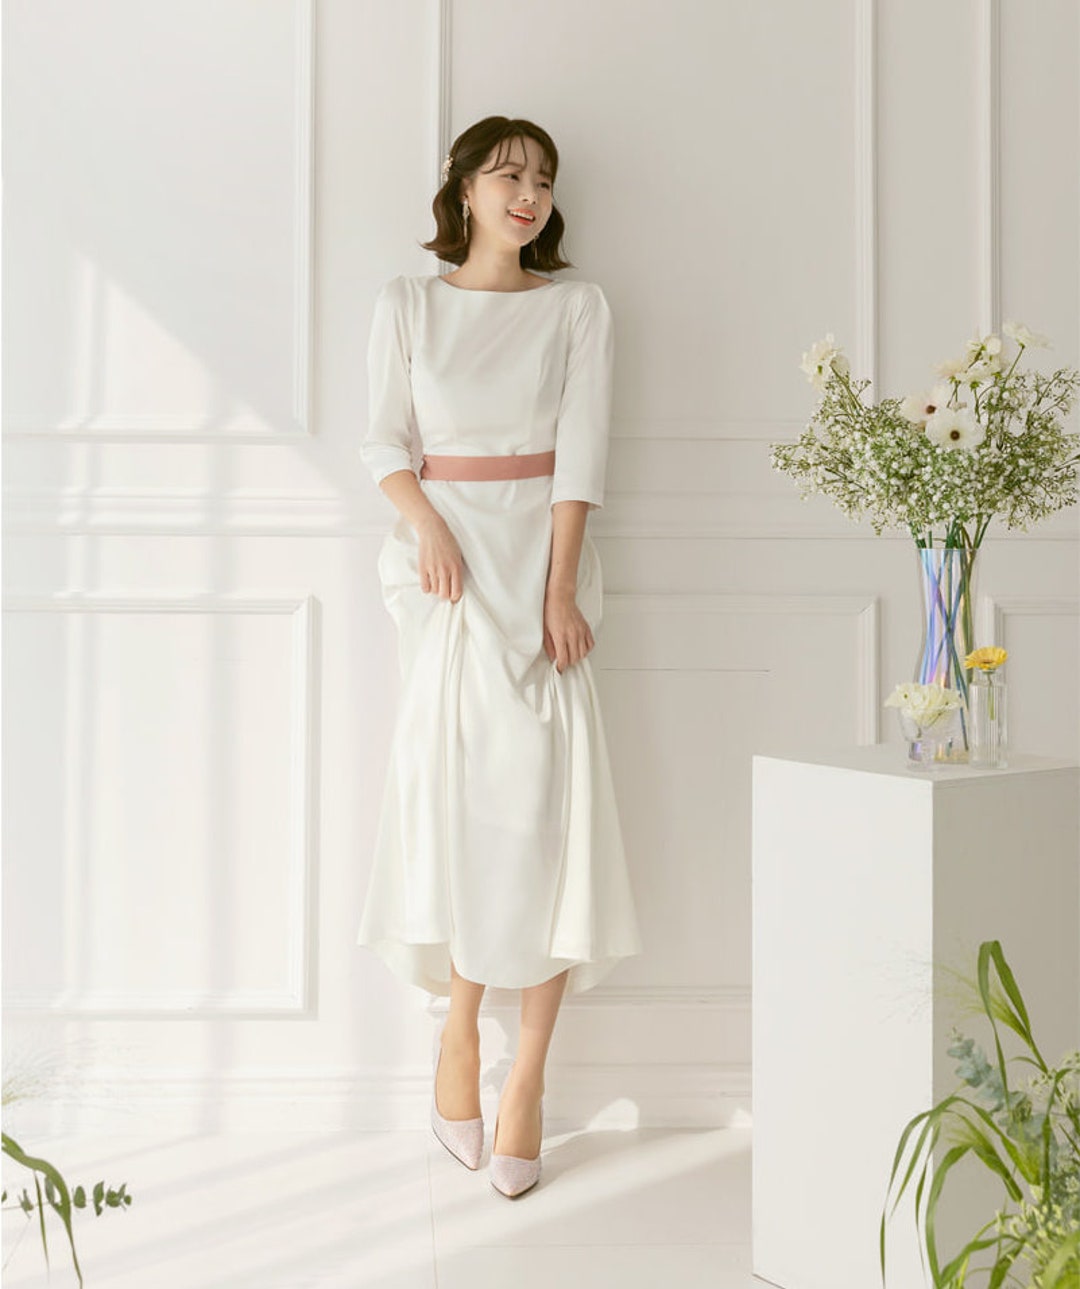 Simple Elegant Korean Wedding Dress Styles| 16 Stylish Wedding Gown  Collections | roowedding